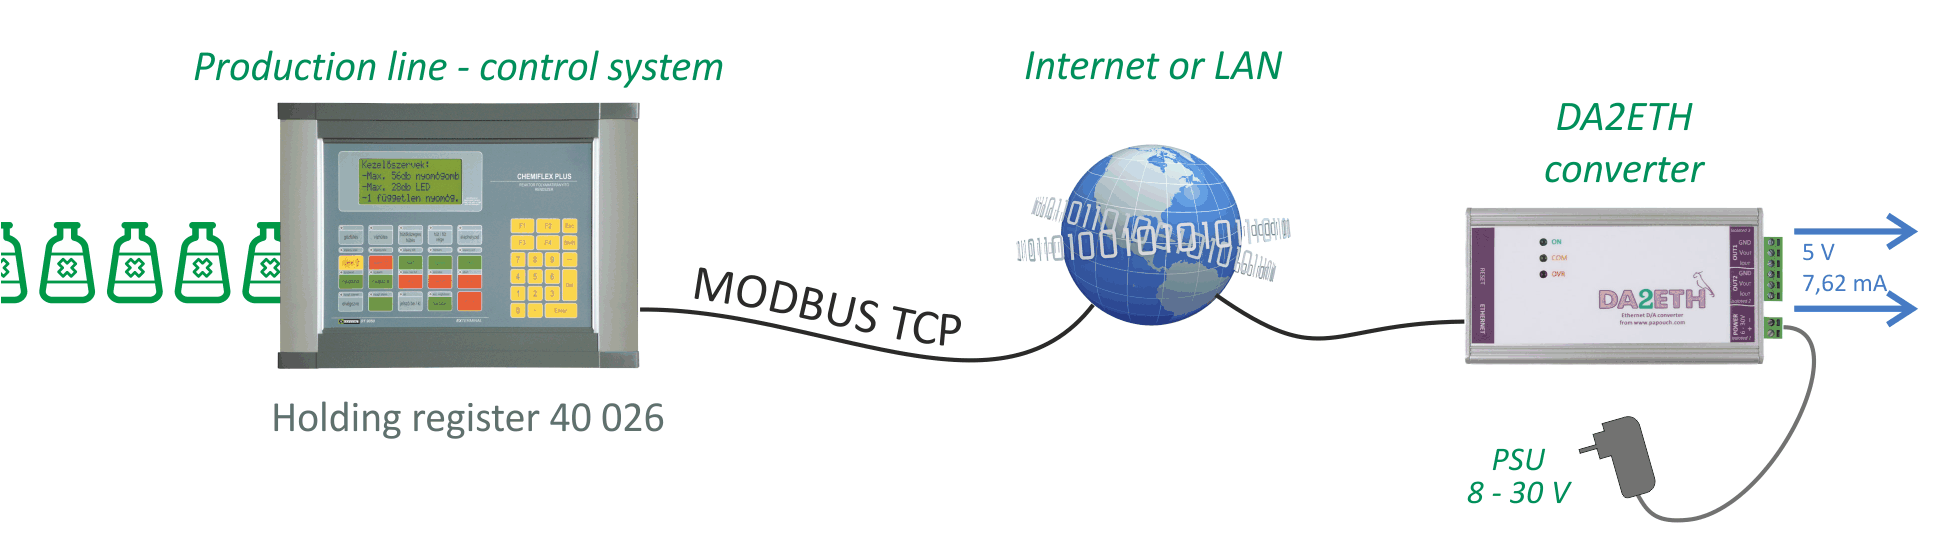 Modbus TCP (client)